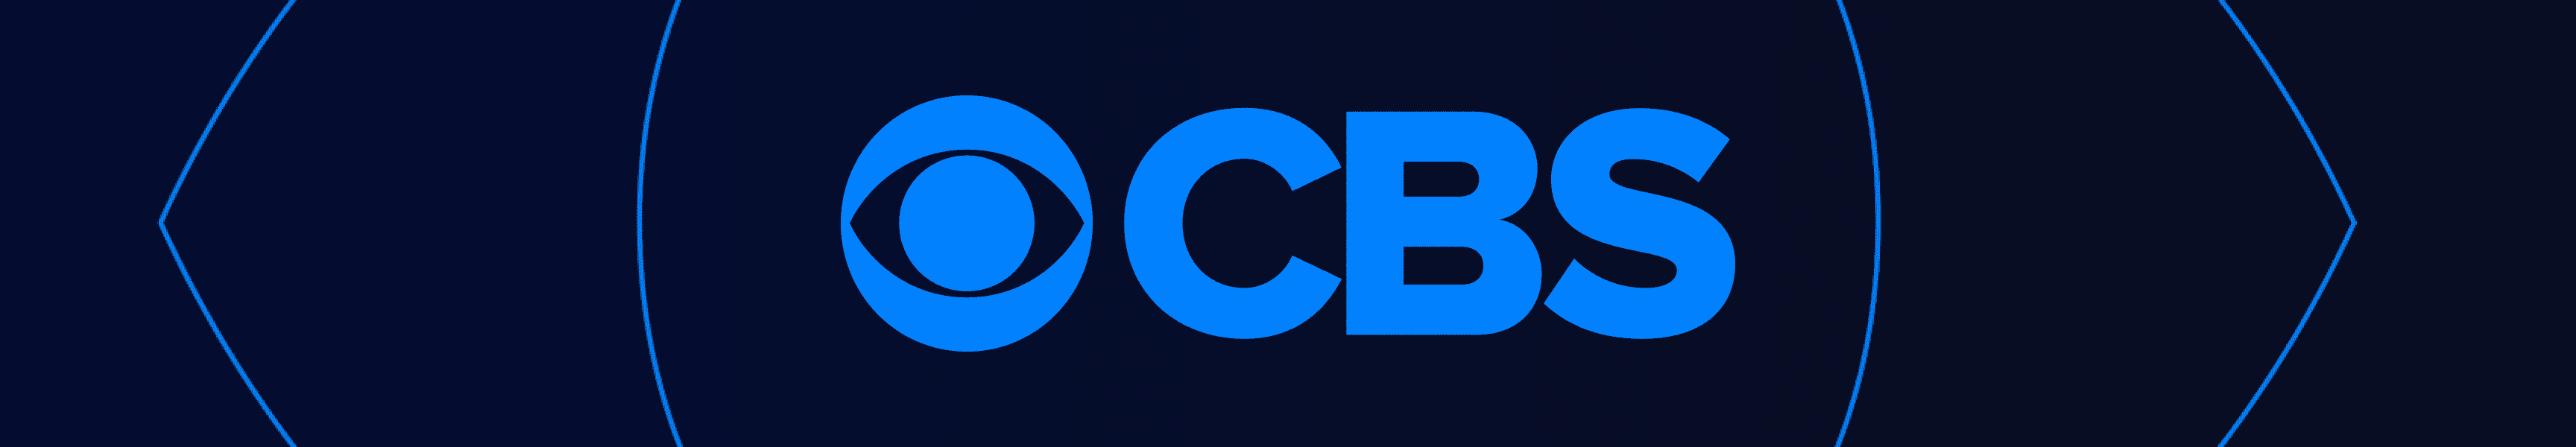 CBS Entertainment Bolsas